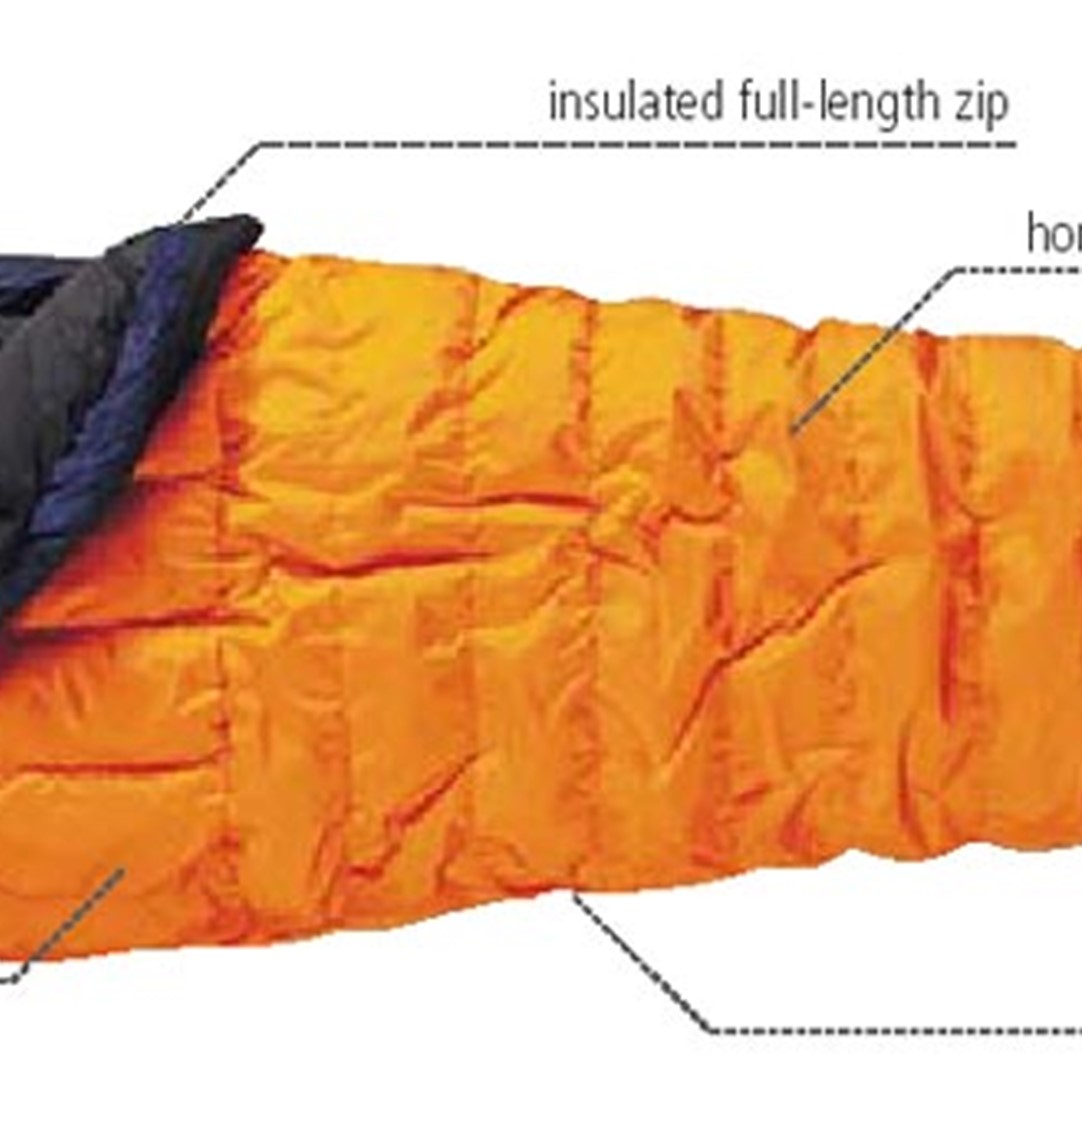 https://www.adventurealternative.com/media/201198/sleeping-bag-guide.jpg?height=1129&width=1082&quality=&mode=Crop&center=0.5,0.5&bgcolor=